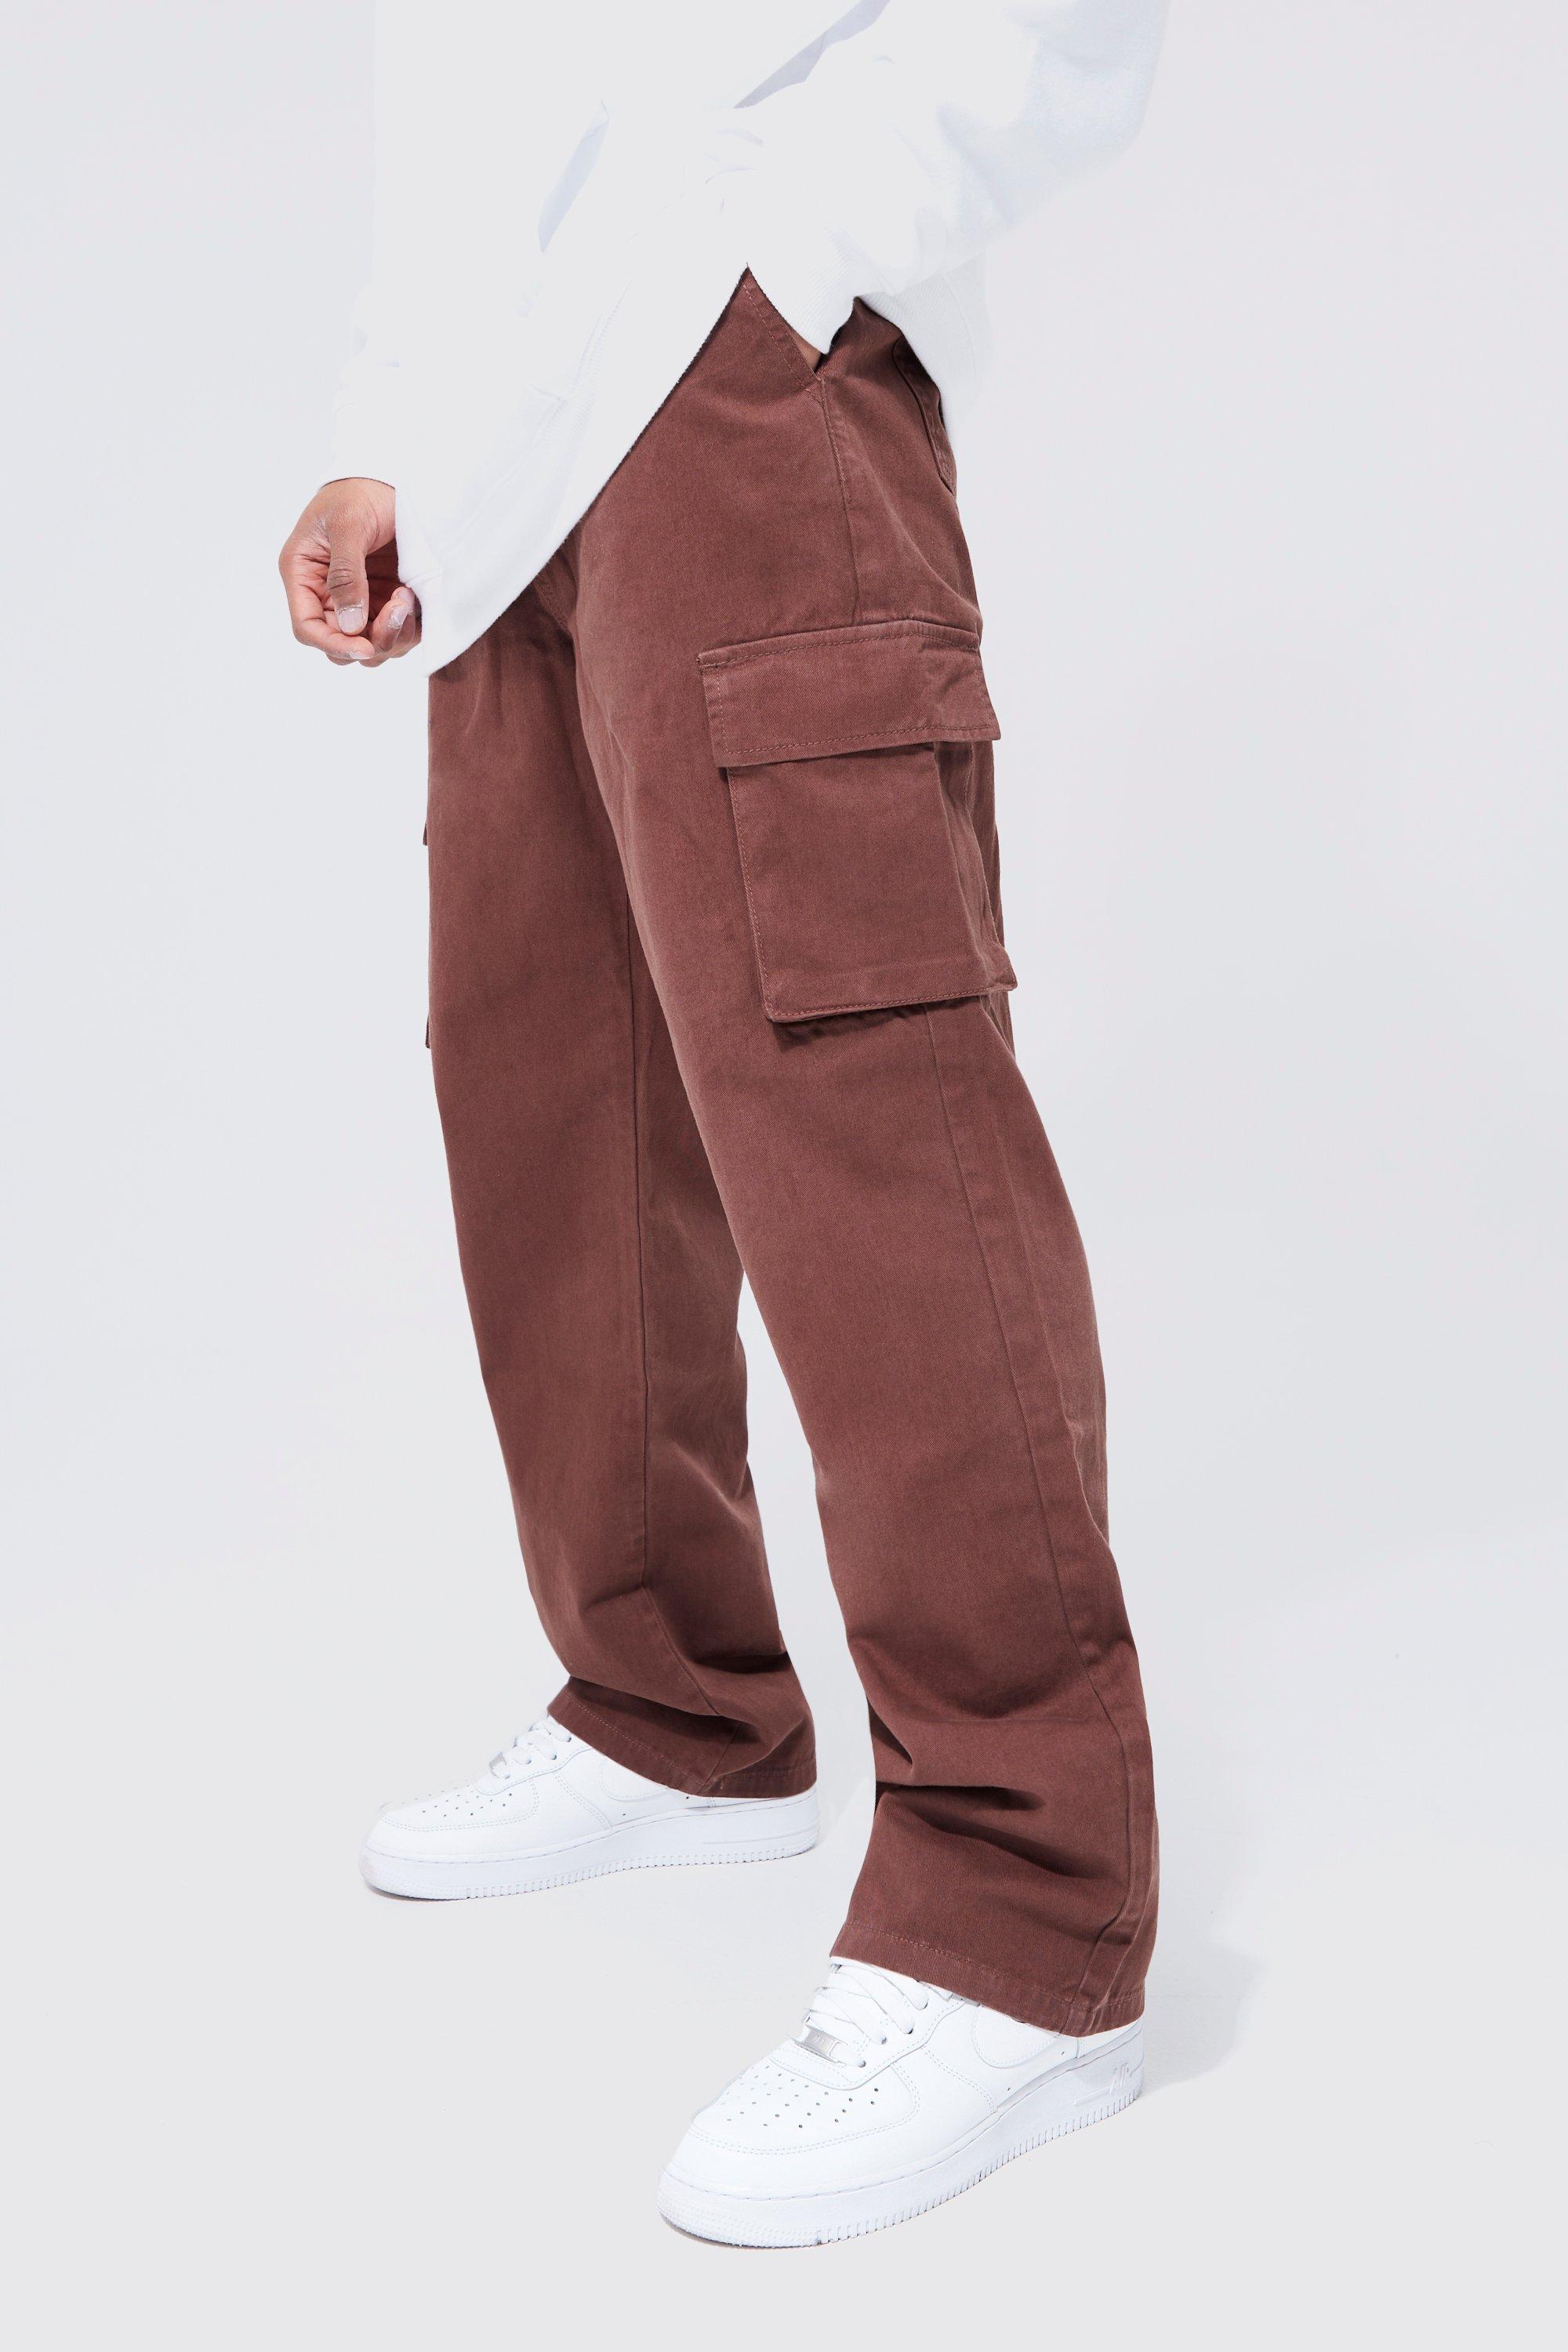 pantalon chino cargo homme - brun - xs, brun